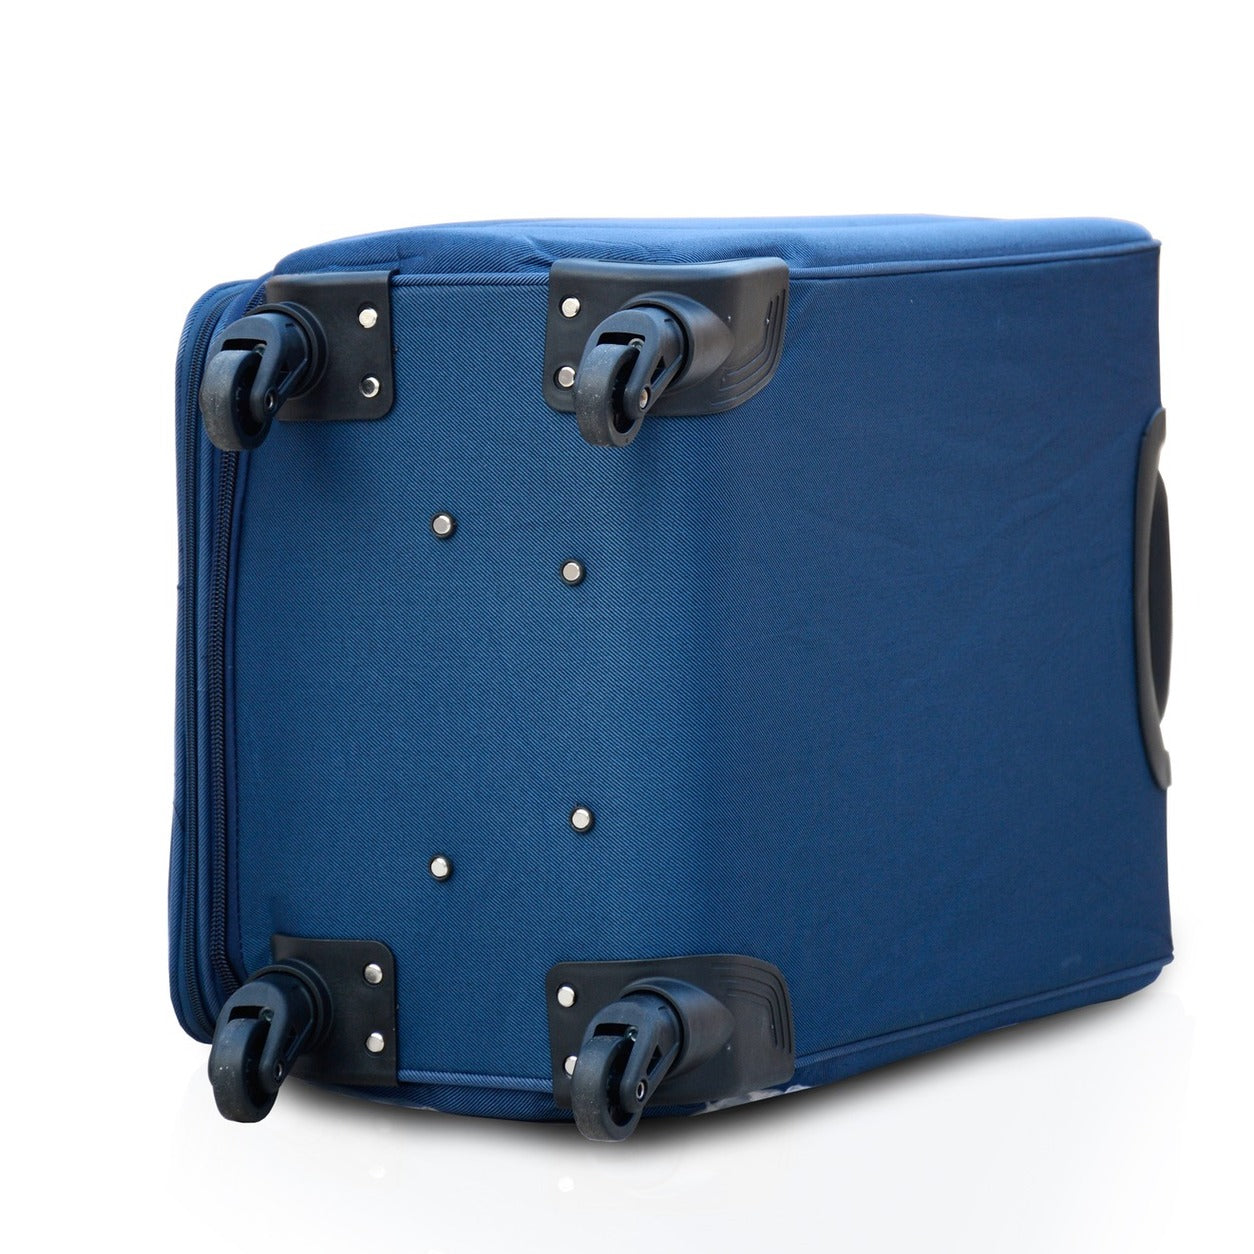 4 Piece Full Set 20" 24" 28" 32 Inches Blue Colour SJ JIAN 4 Wheel Luggage Lightweight Soft Material Trolley Bag